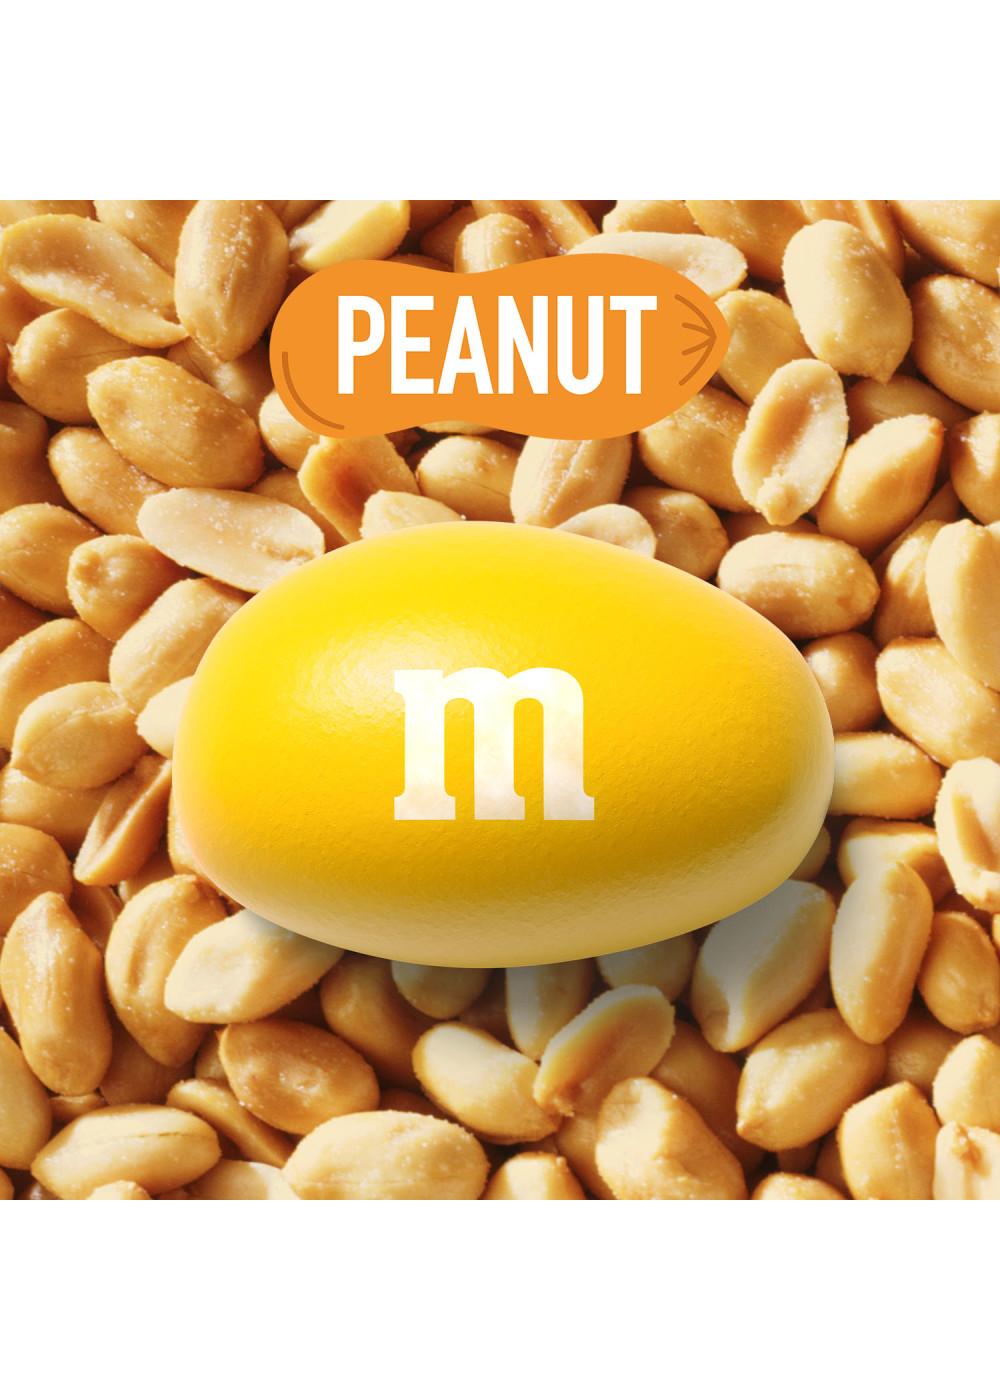 Fun Size Peanut Butter M&Ms 16ct